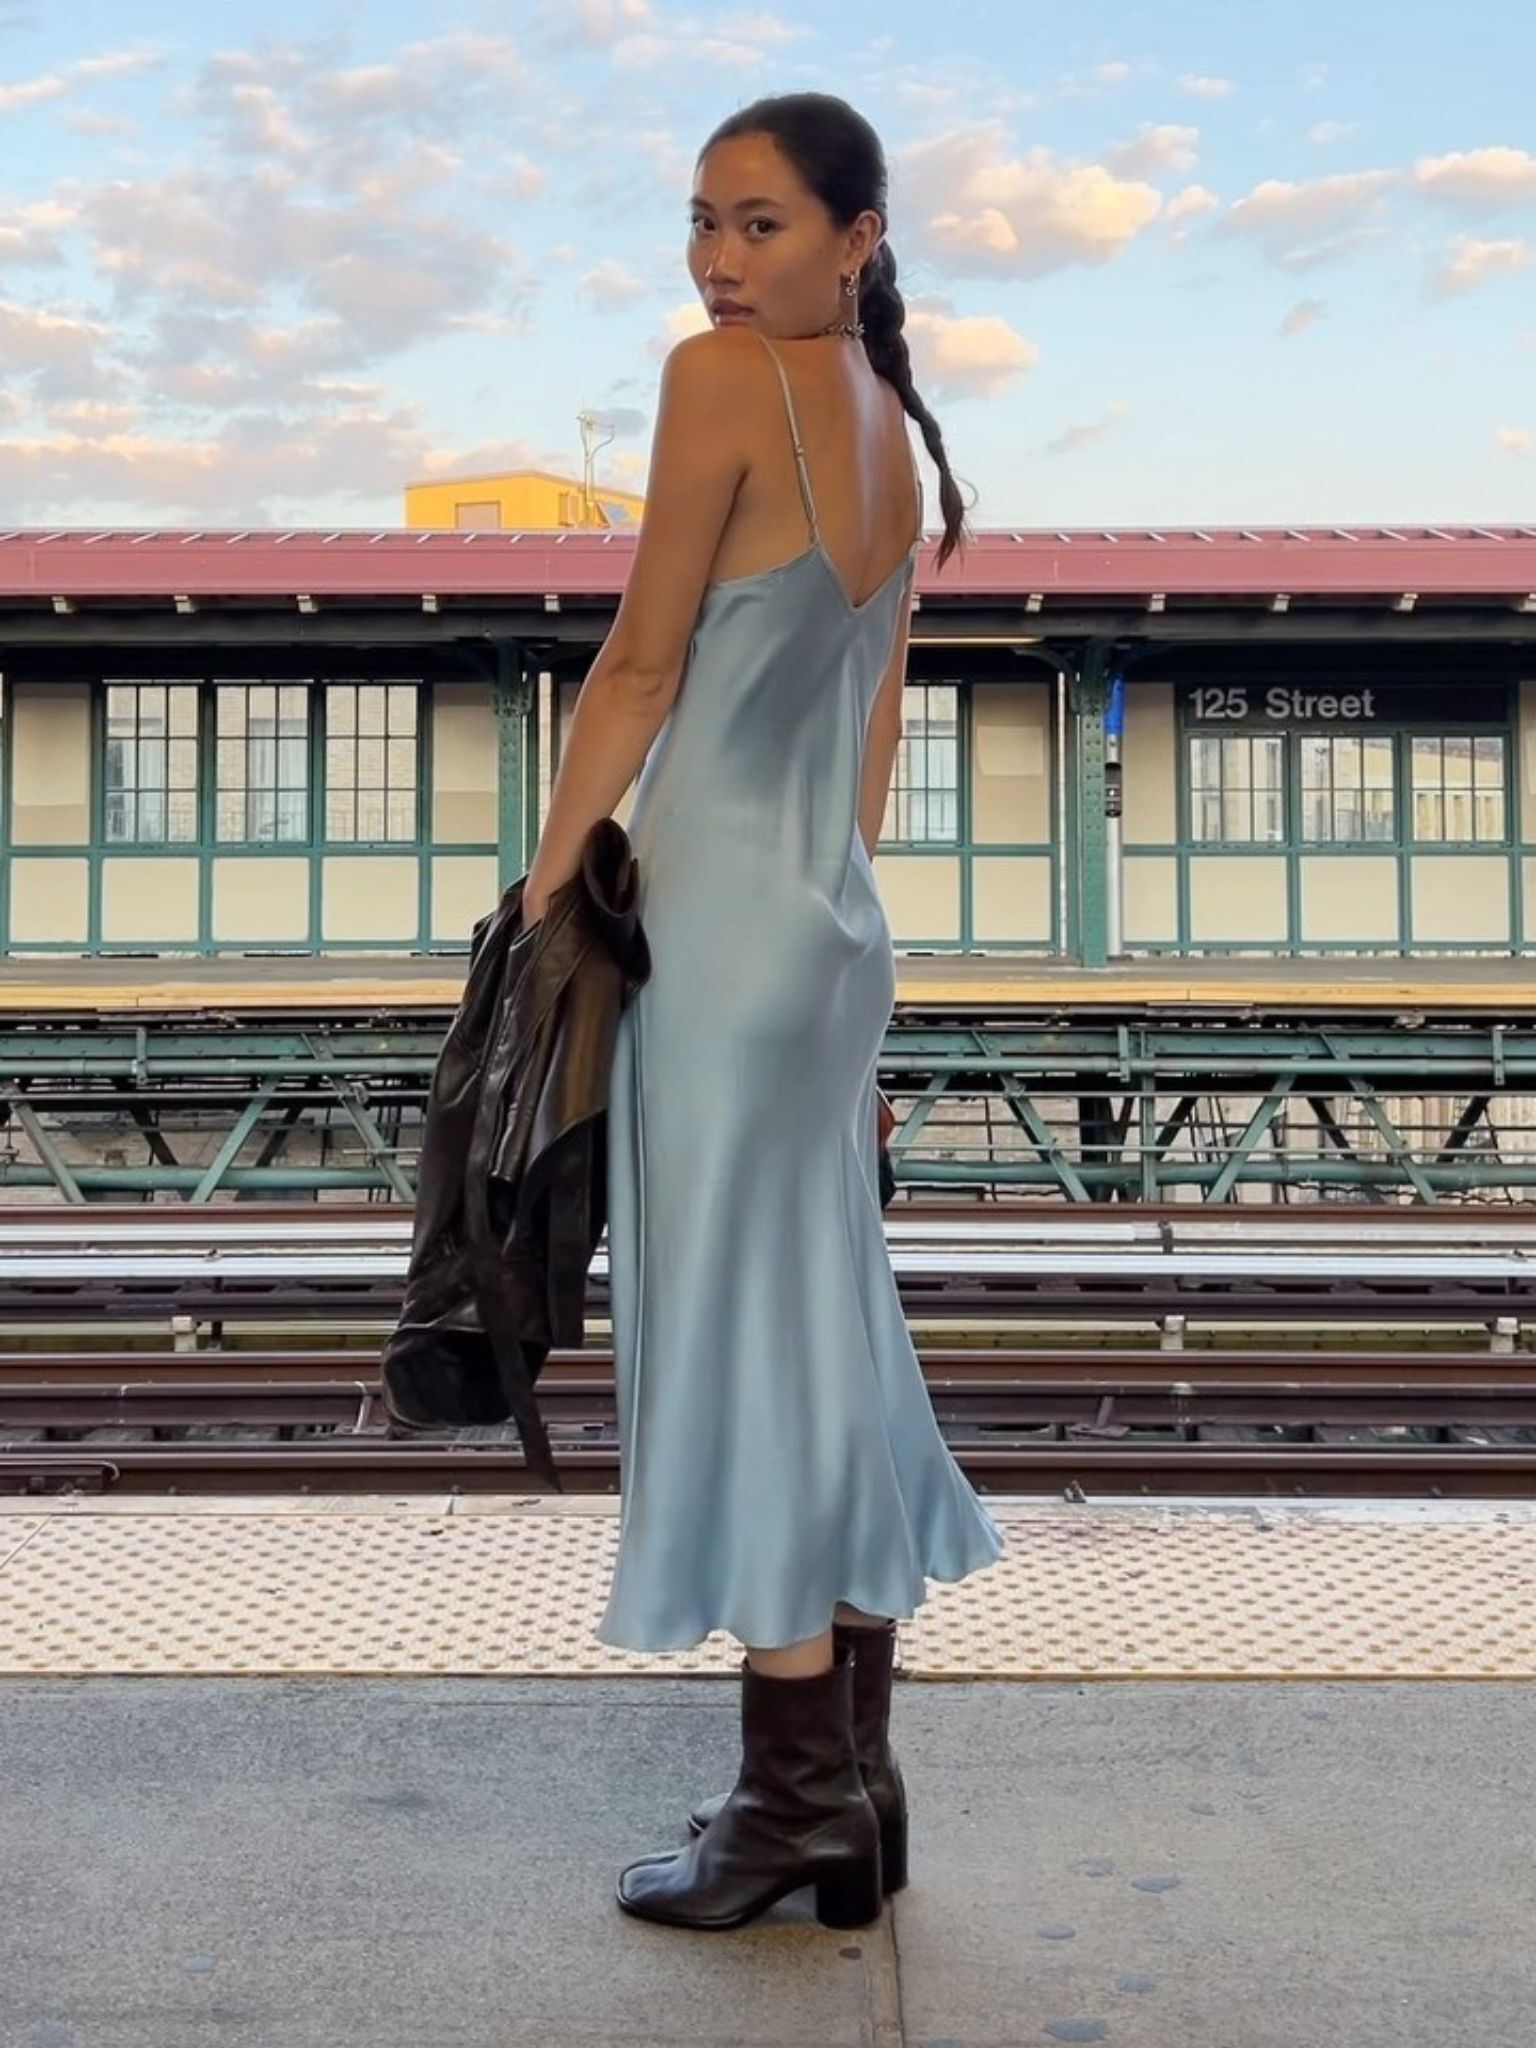 Influencer styles a pale blue dress.